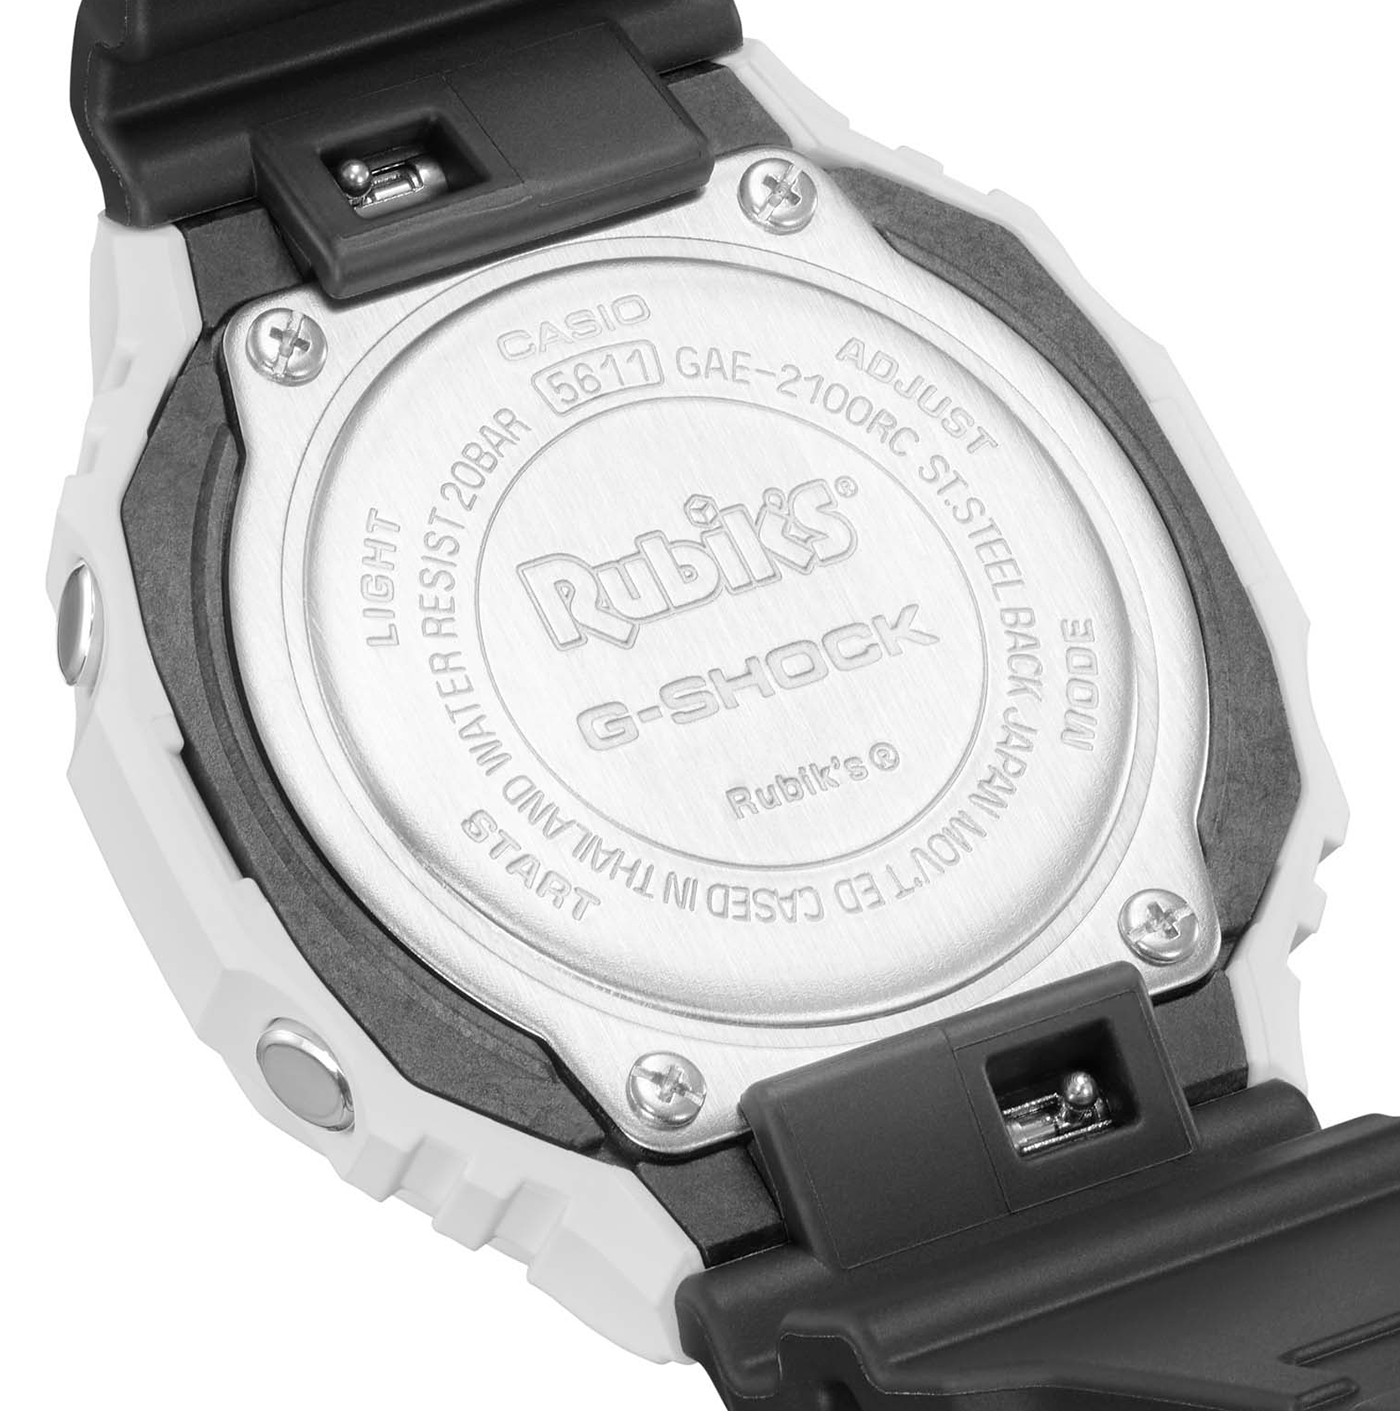 Casio представляет ограниченную серию часов G-Shock GAE2100RC-1A